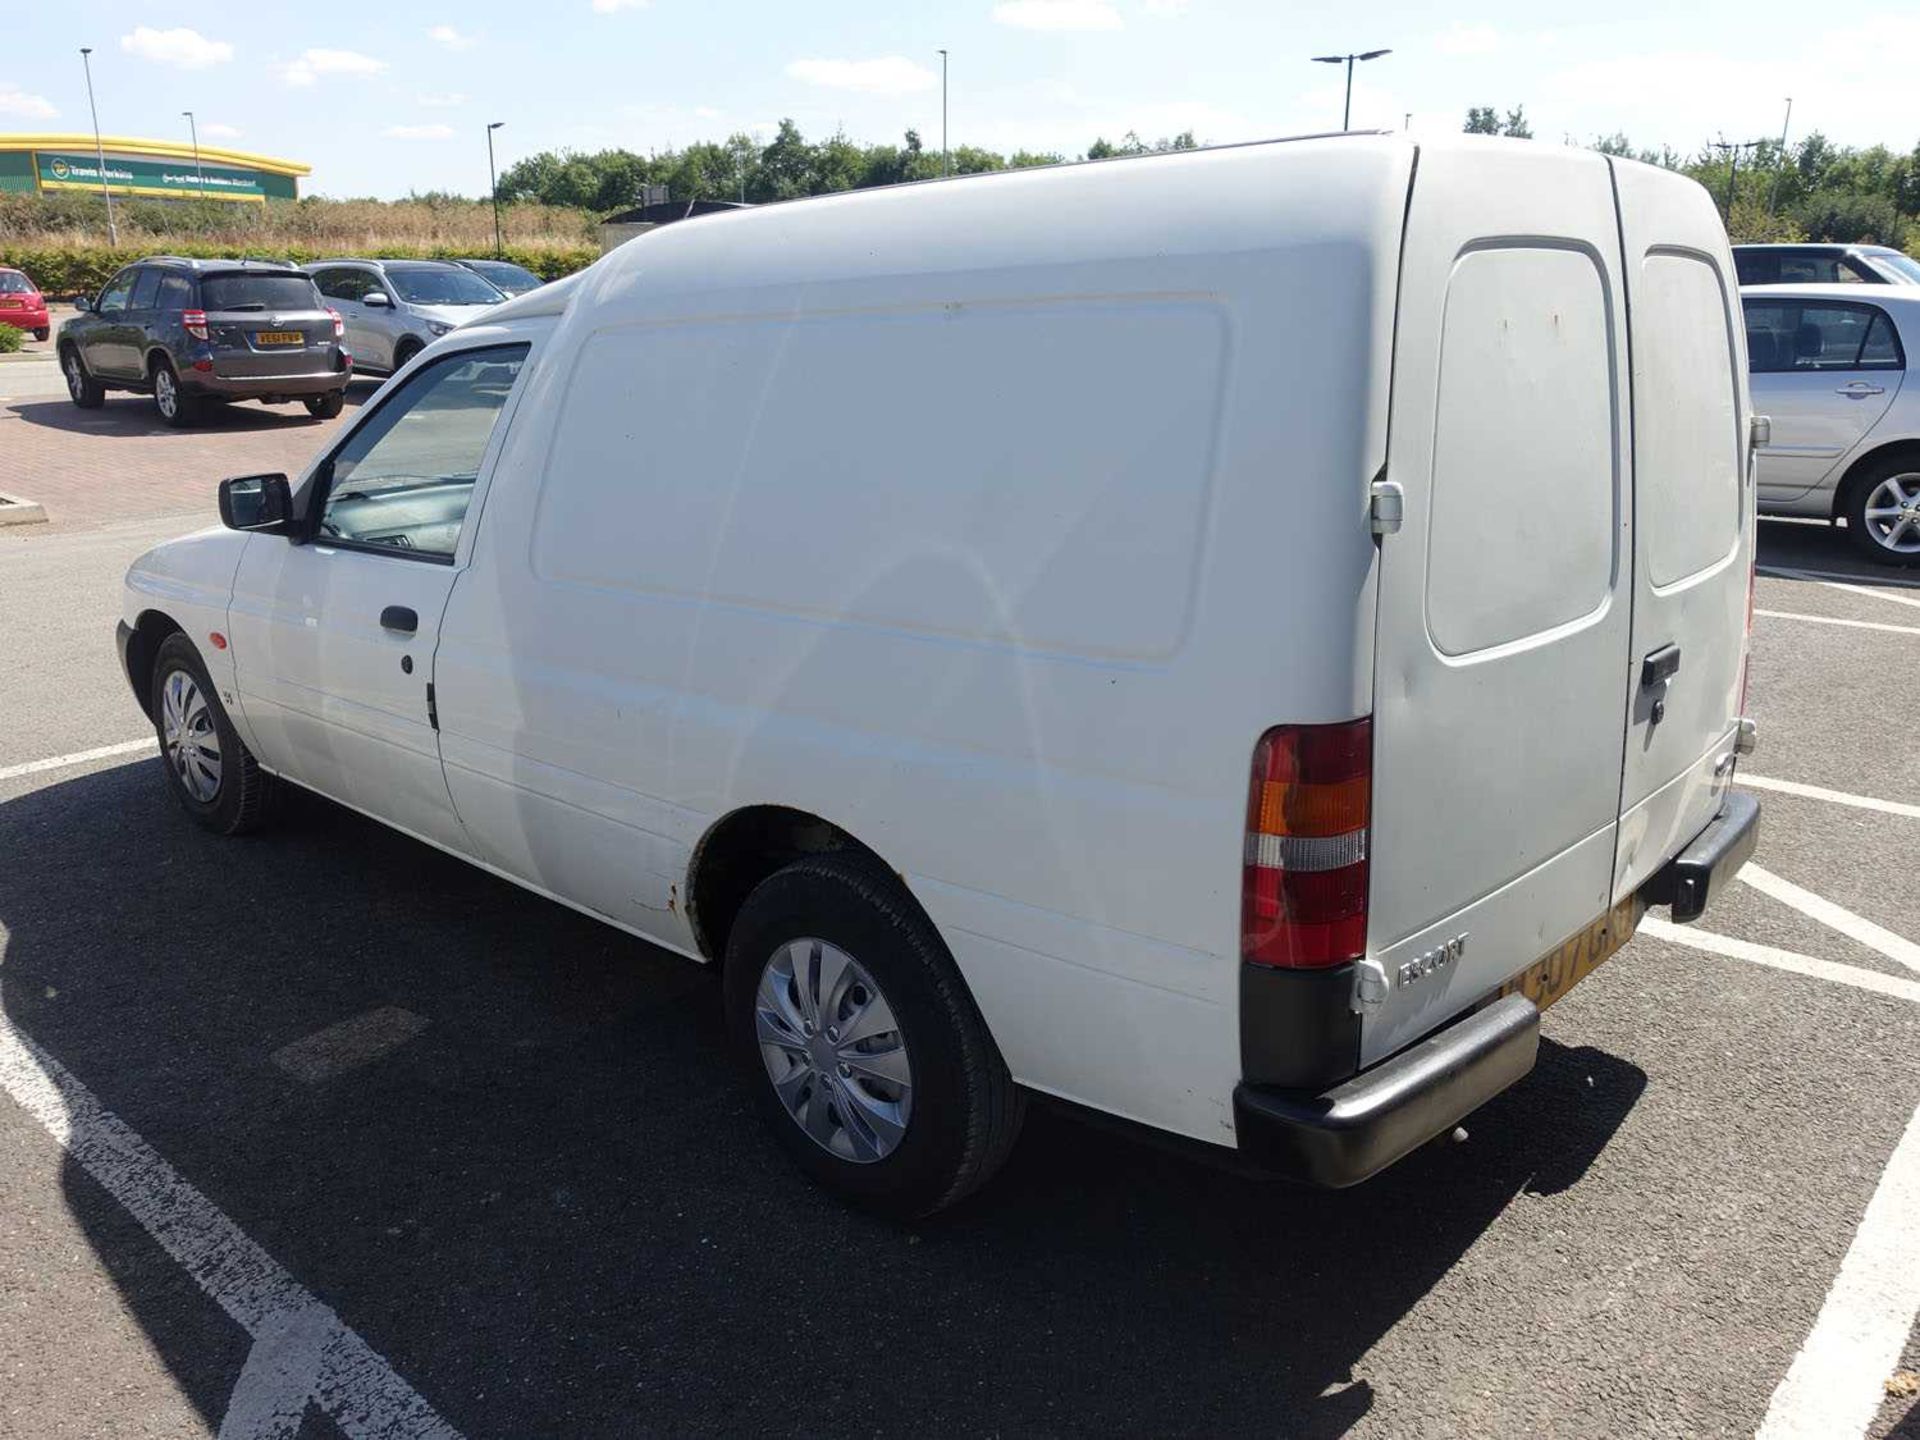 (2000) Escort 55 D Van in white, registration plate W307 GKU, 1753cc, diesel, first registered 17. - Image 3 of 9